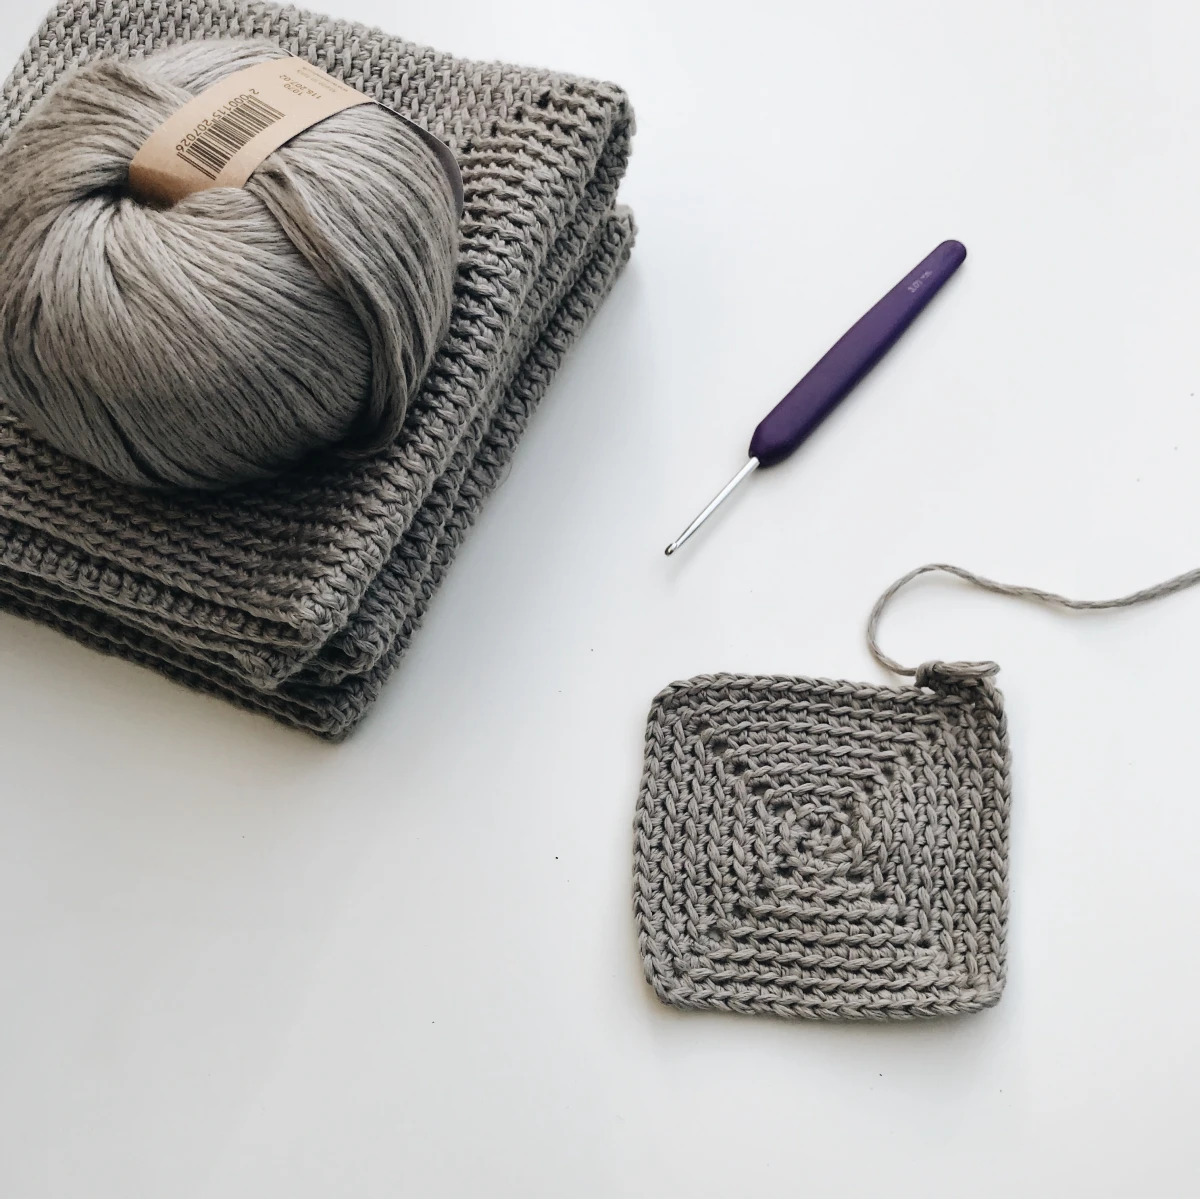 granny square crochet with needle